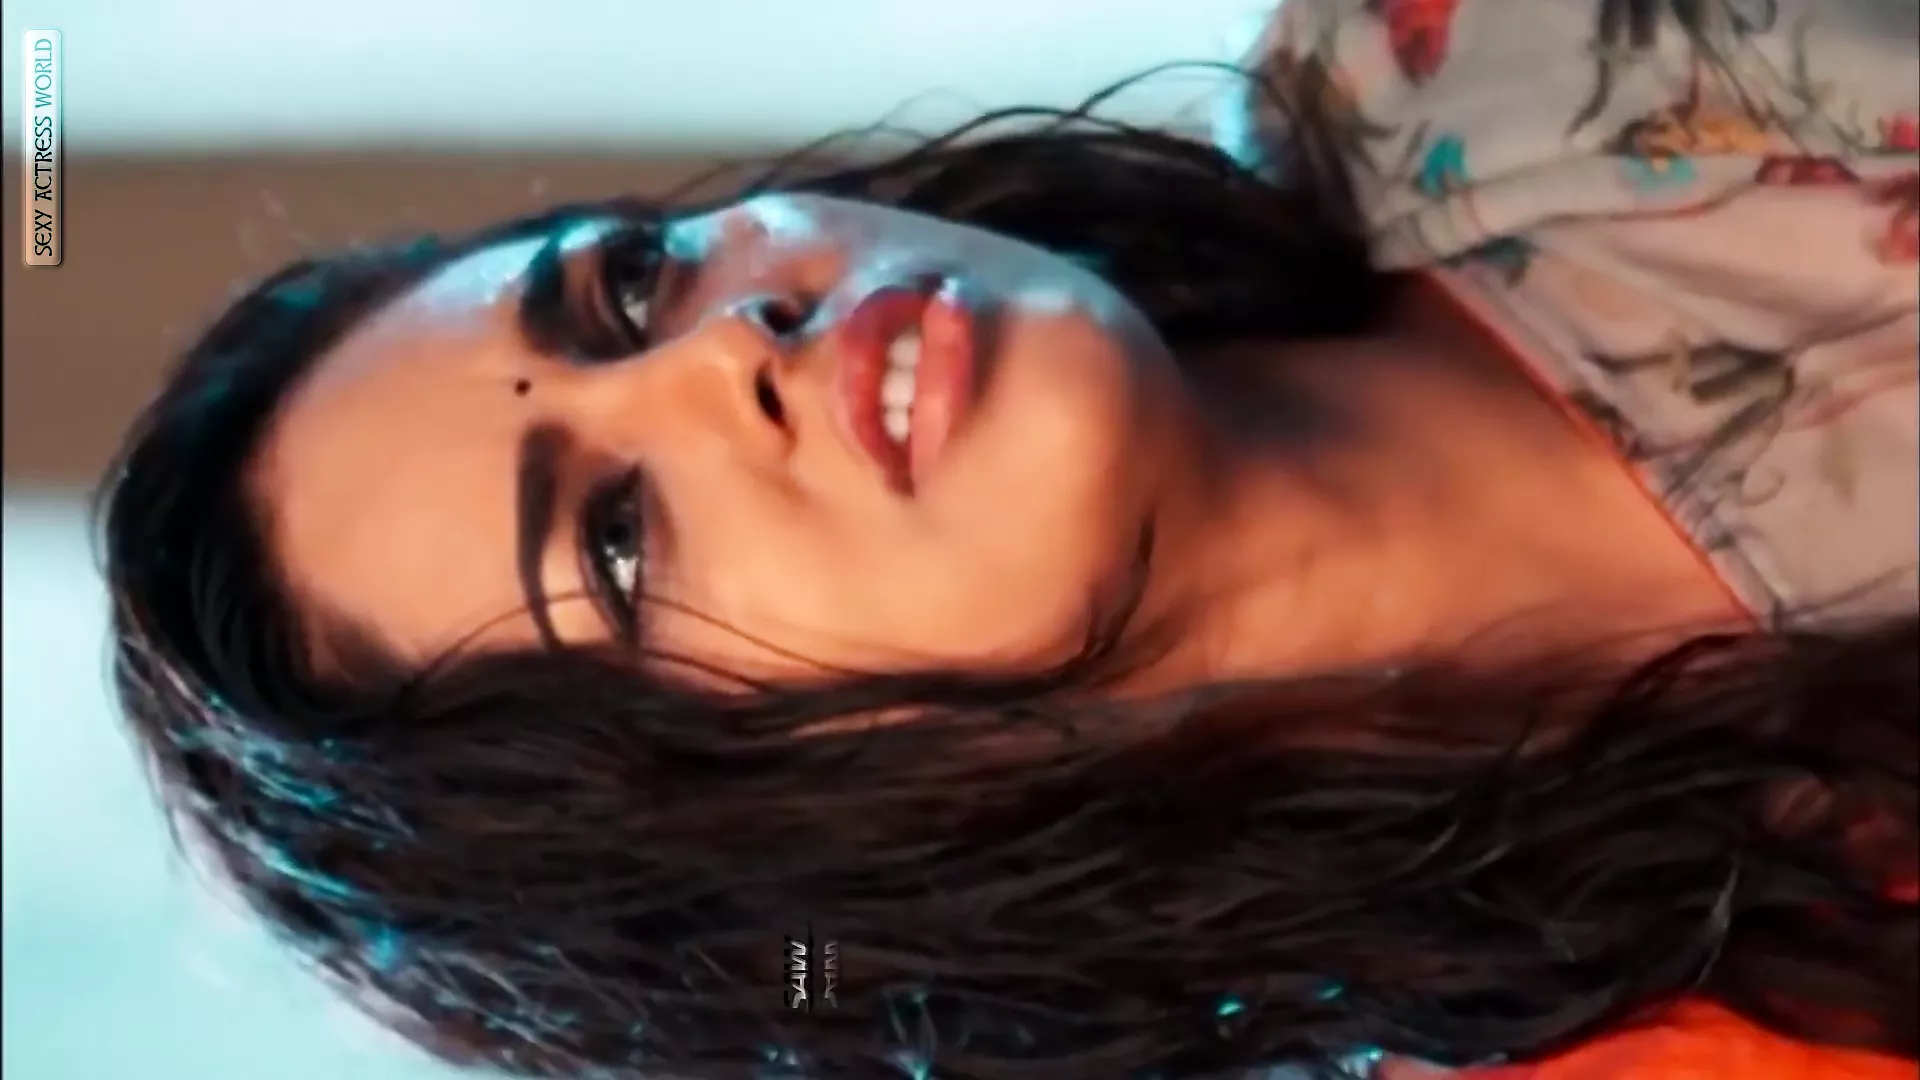 Xx Telugu Actress Sex Videos - Nandita Shwetha Hot Expression and Body Full View: Porn 94 | xHamster